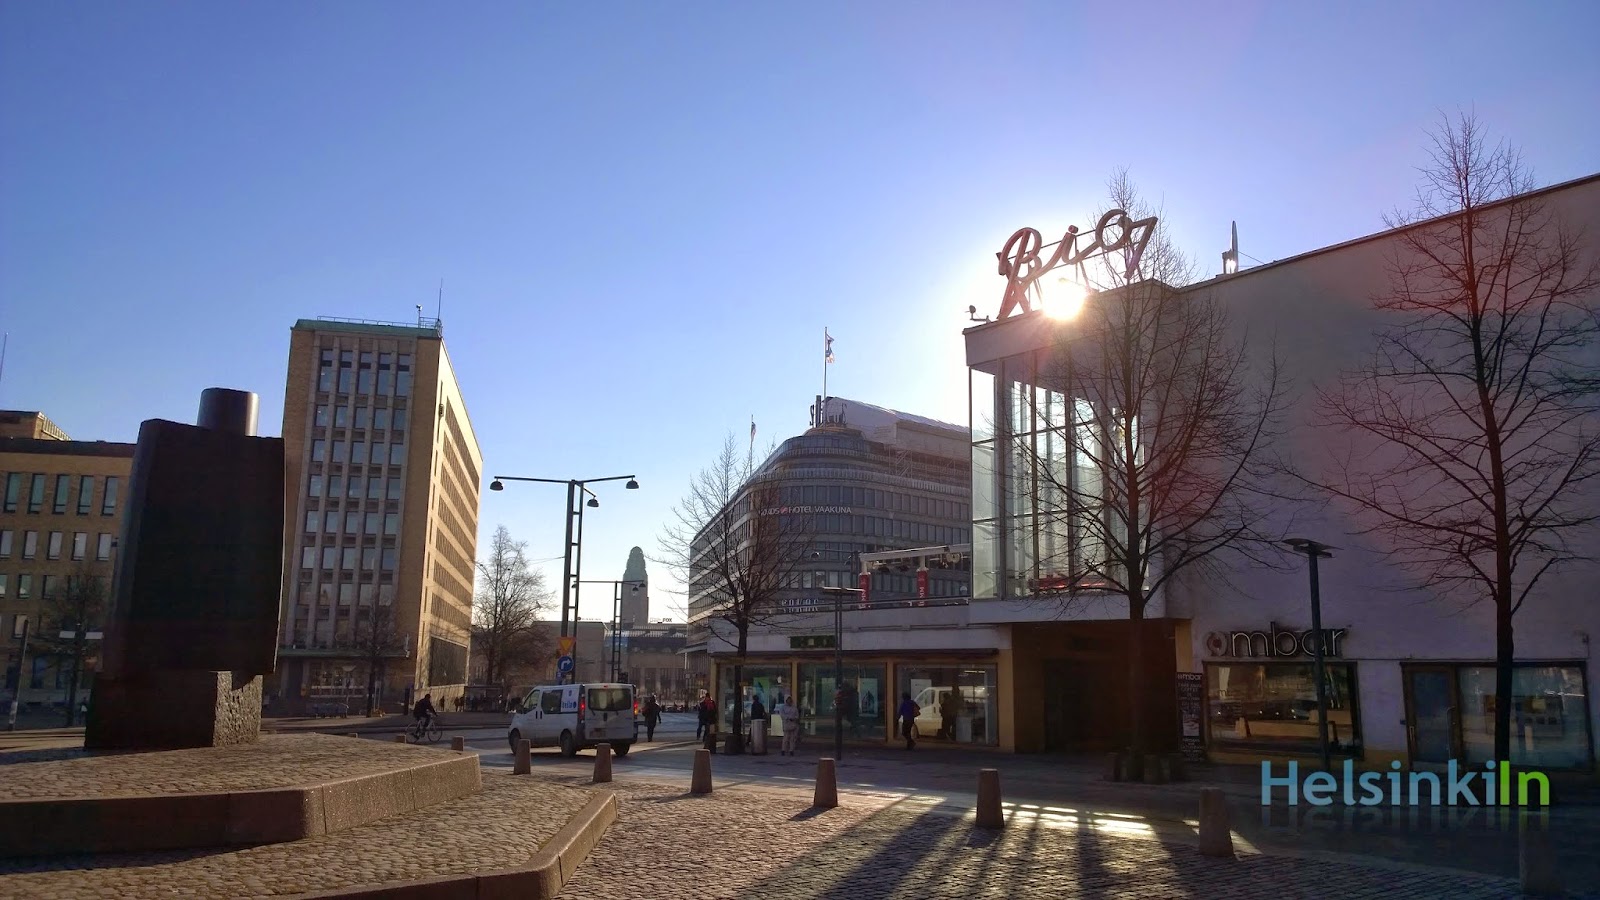 Sunny Helsinki on a weekday morning